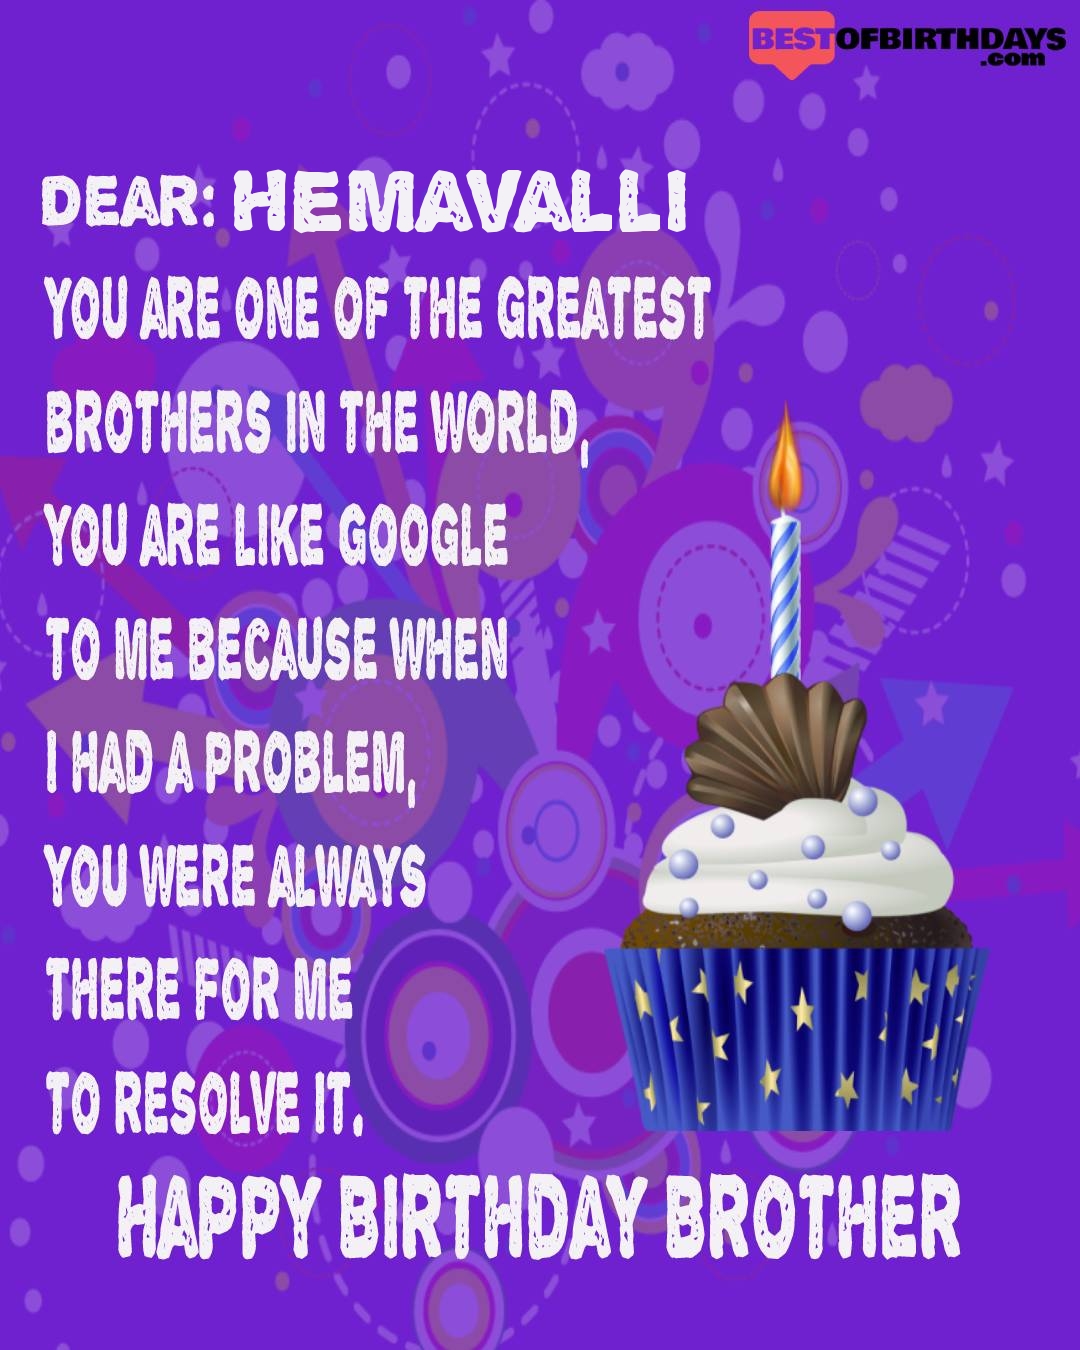 Happy birthday hemavalli bhai brother bro